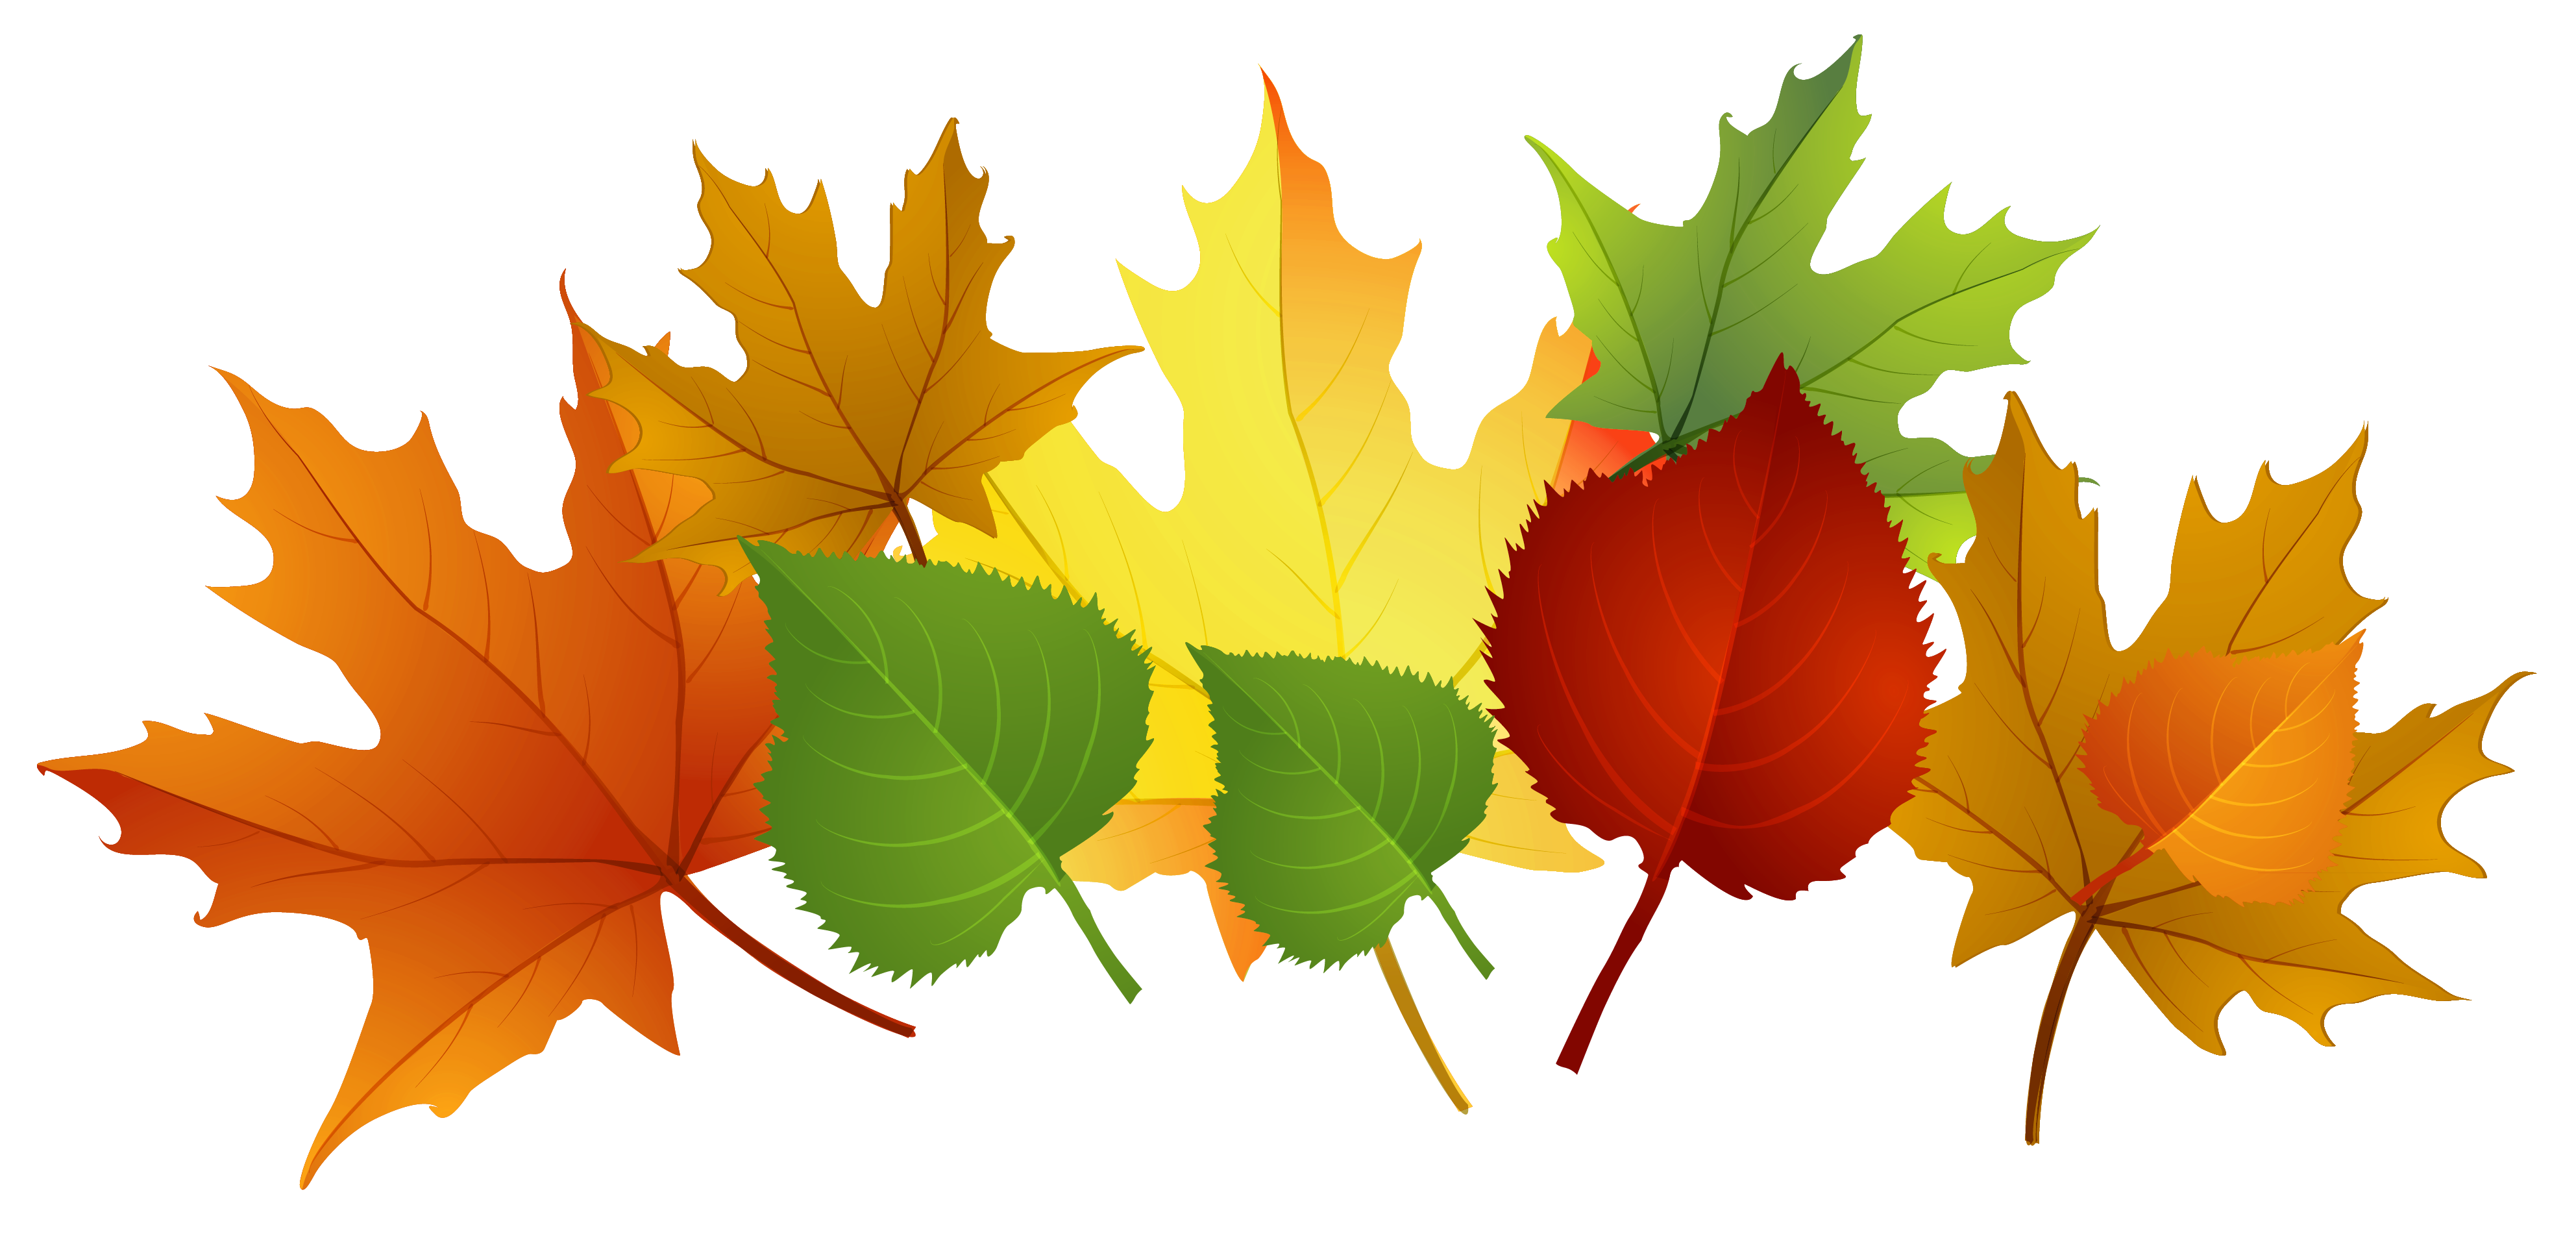 Fall leaves fall clip art aut - Clip Art Of Leaves